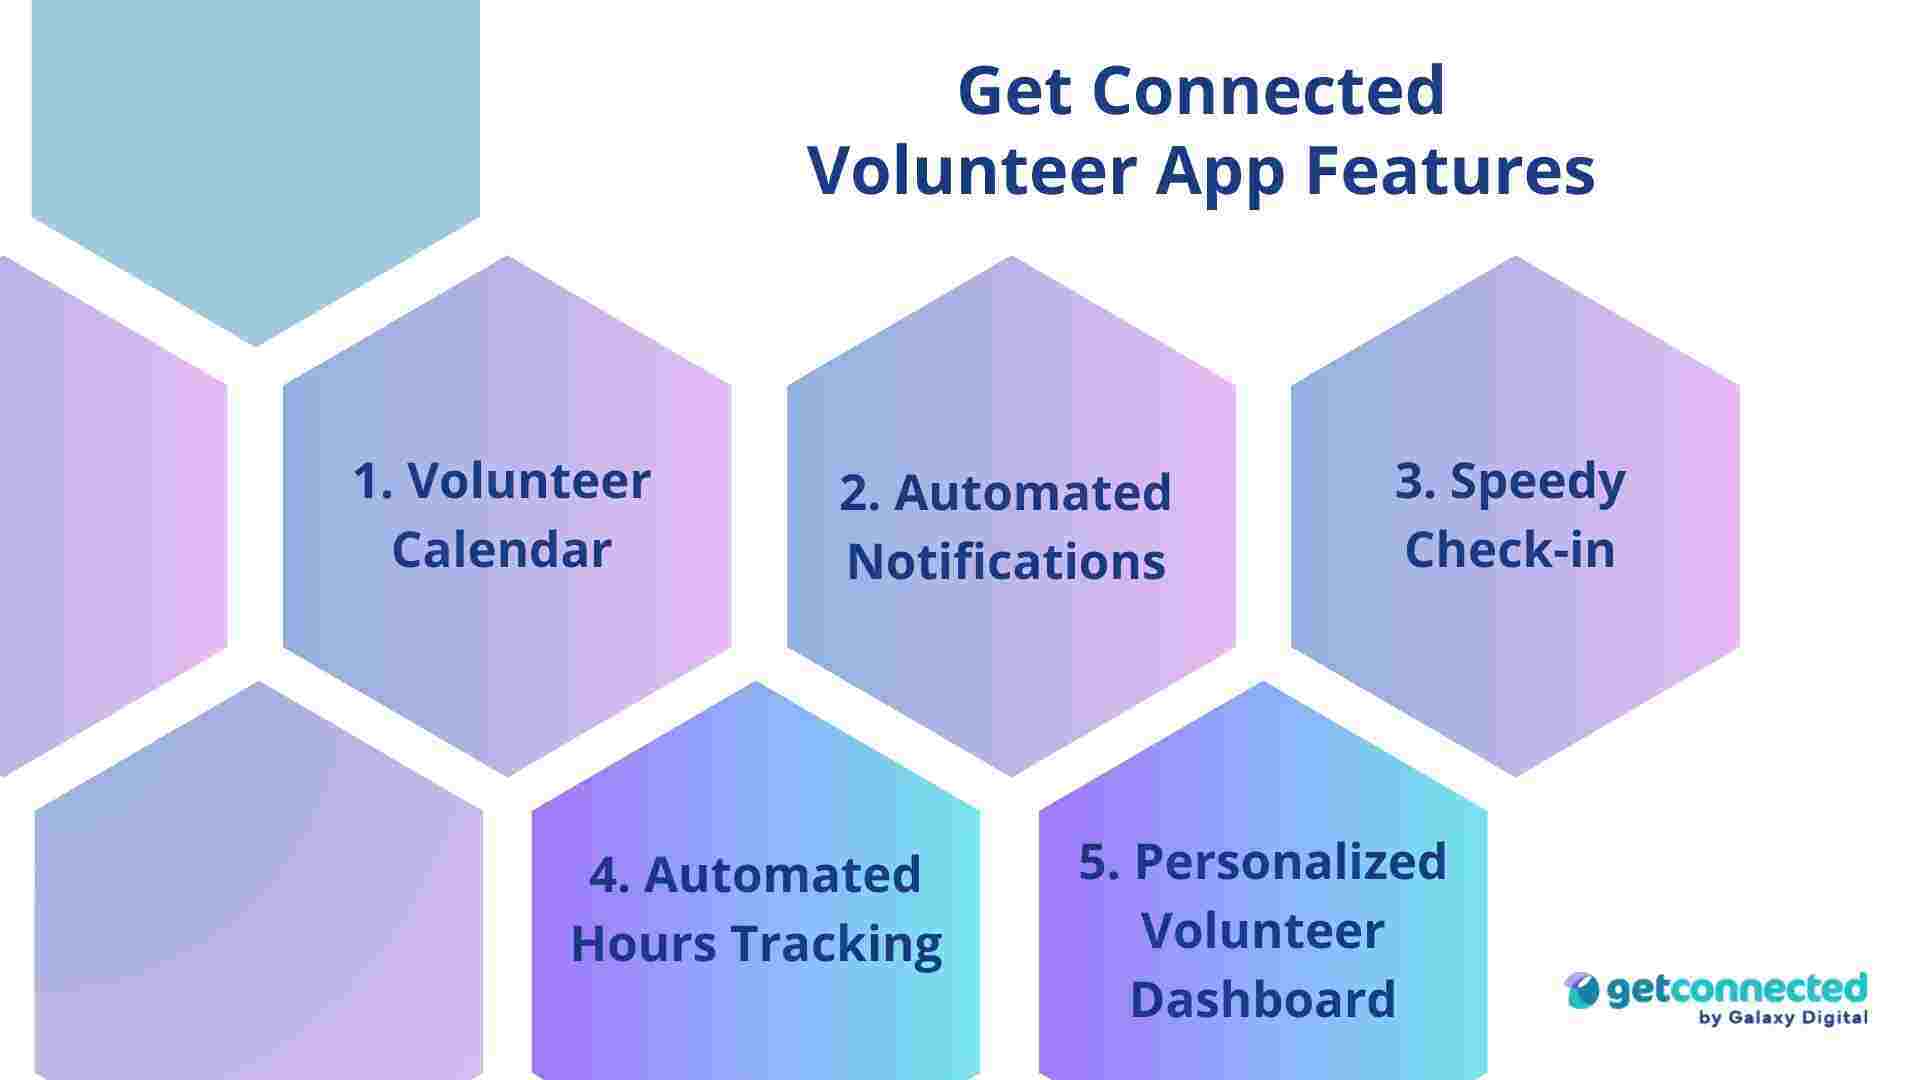 Get Connected Volunteer Mobile App Features